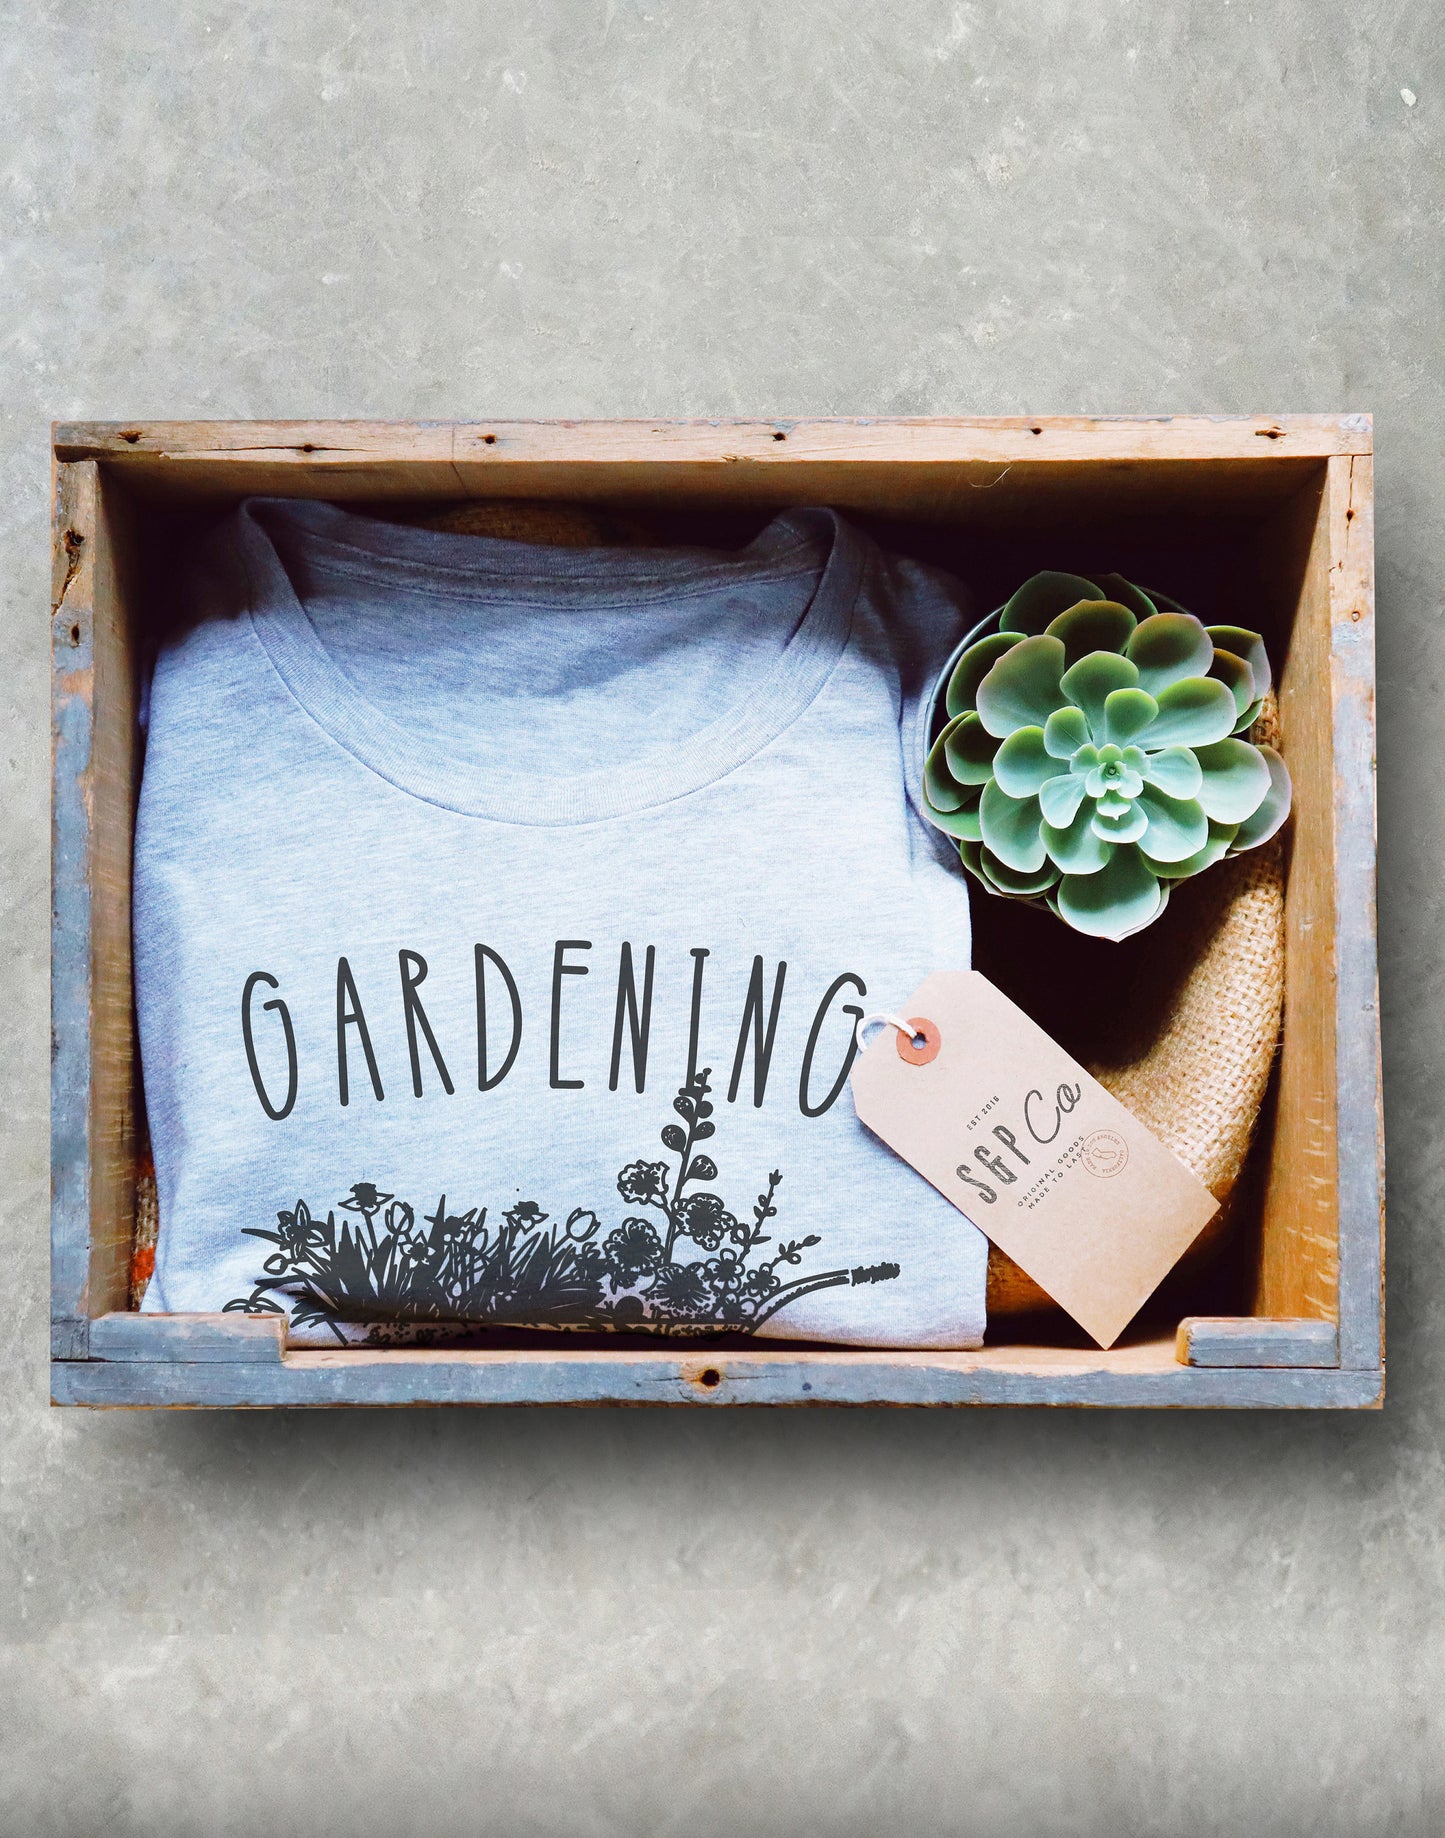 Gardening Dirt Cheap Therapy Unisex Shirt - Gardener Gift, Plant Shirt, Allotment Shirt, Crazy Plant Lady, Vegan Shirt, Gardening Shirt